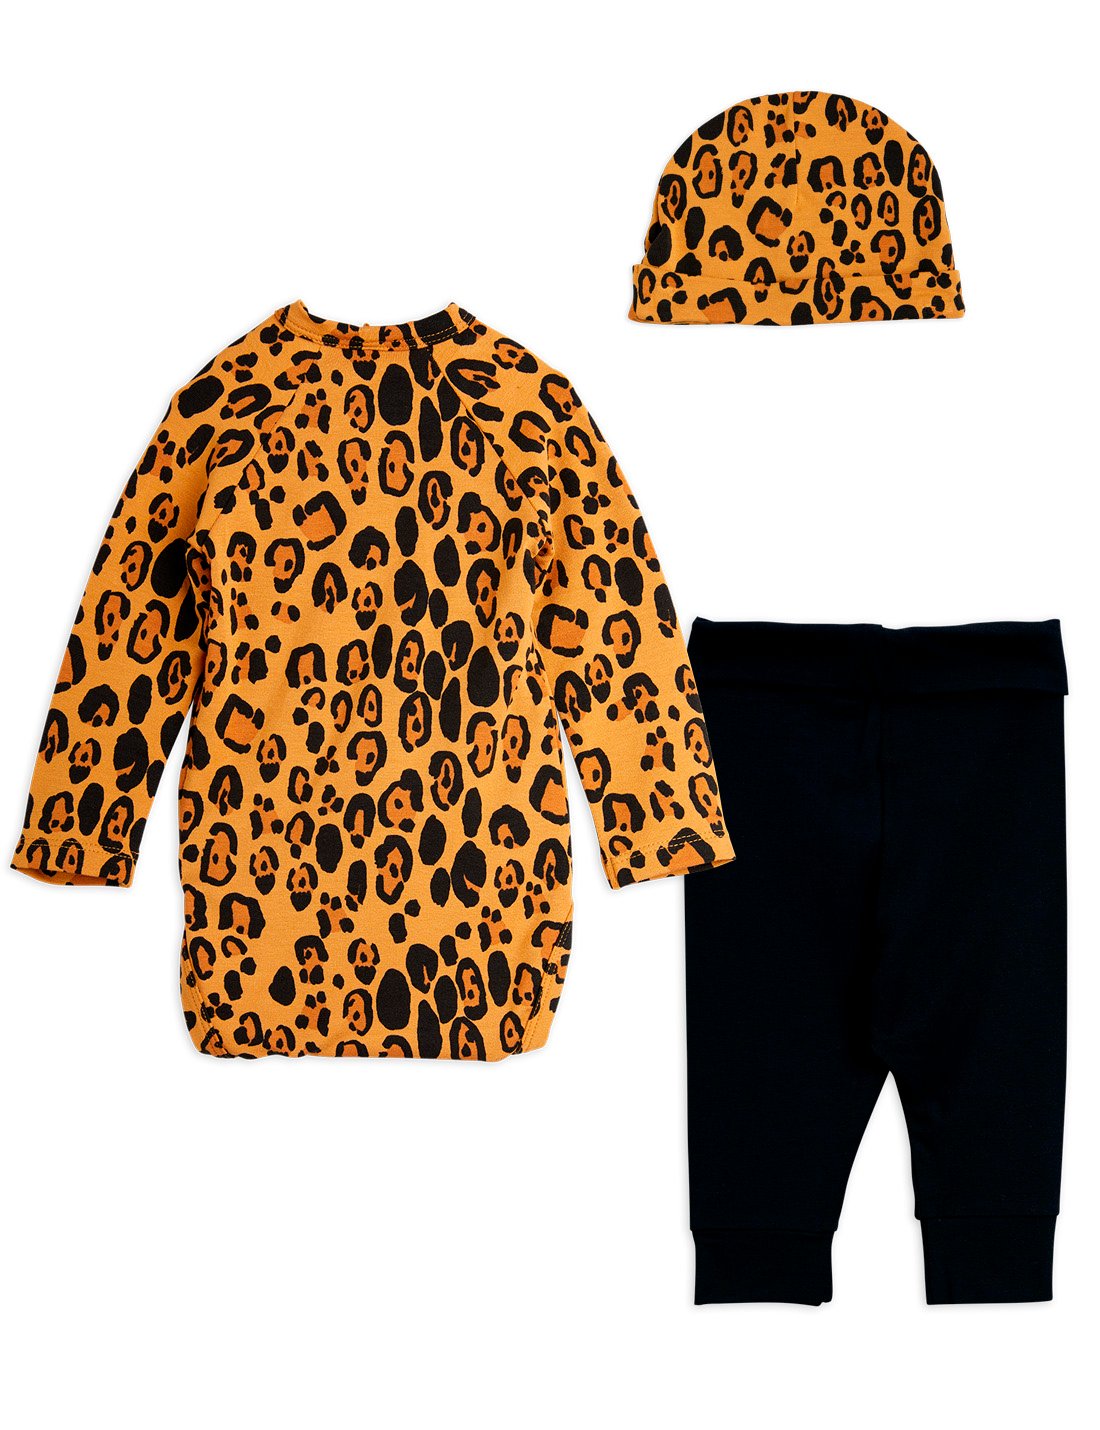 Basic leopard baby kit